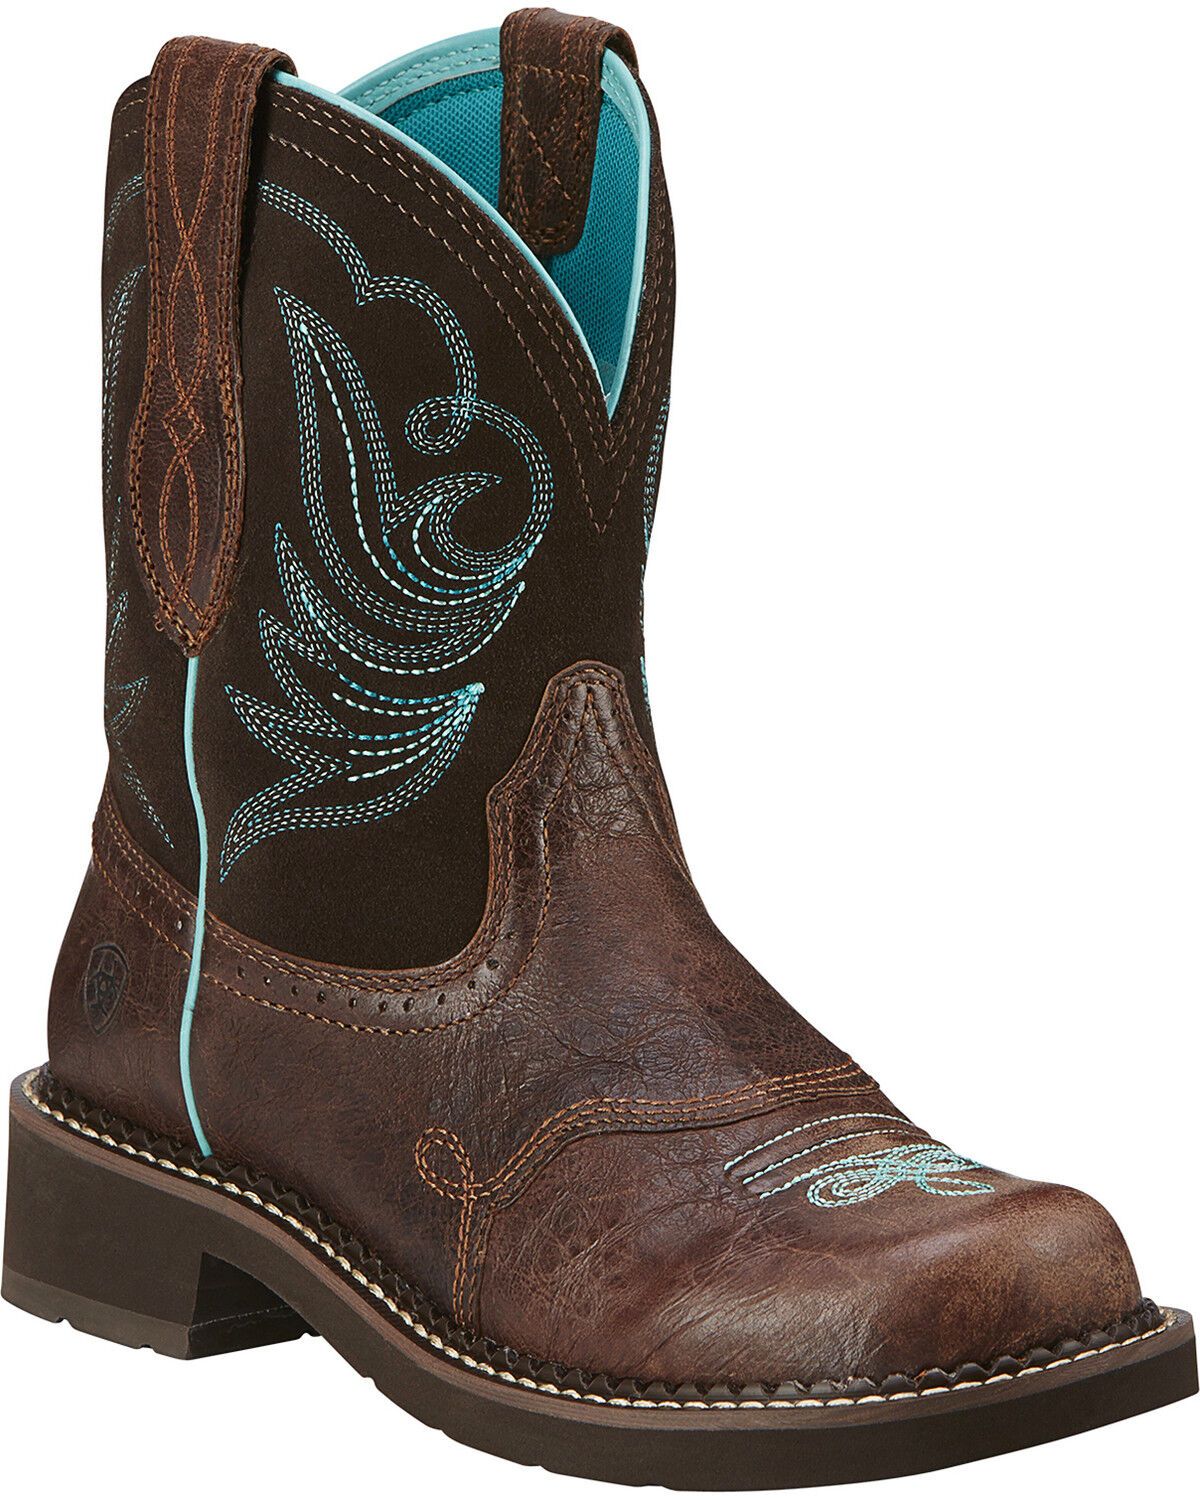 Barley/Aztec Ariat Ladies Fatbaby Heritage Cowboy Boots 